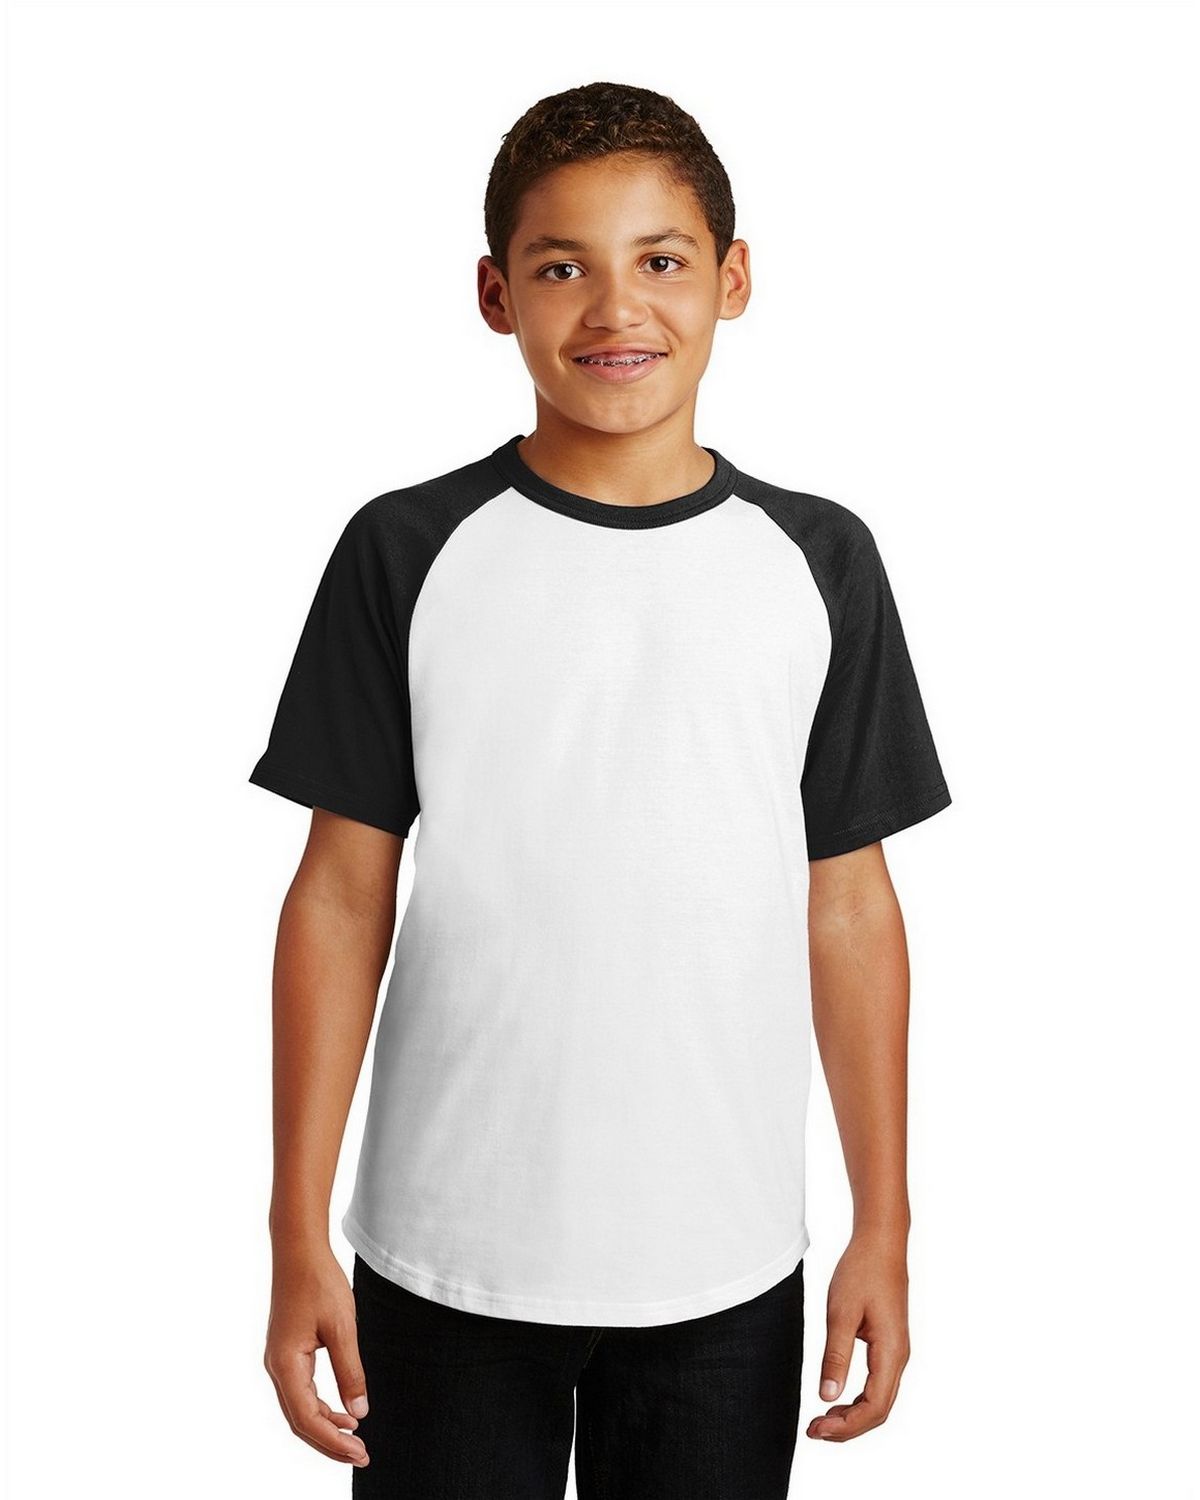 T-Shirt Short Sleeve Kids Tee Shirt Release Skills SPOR for Girls Boys